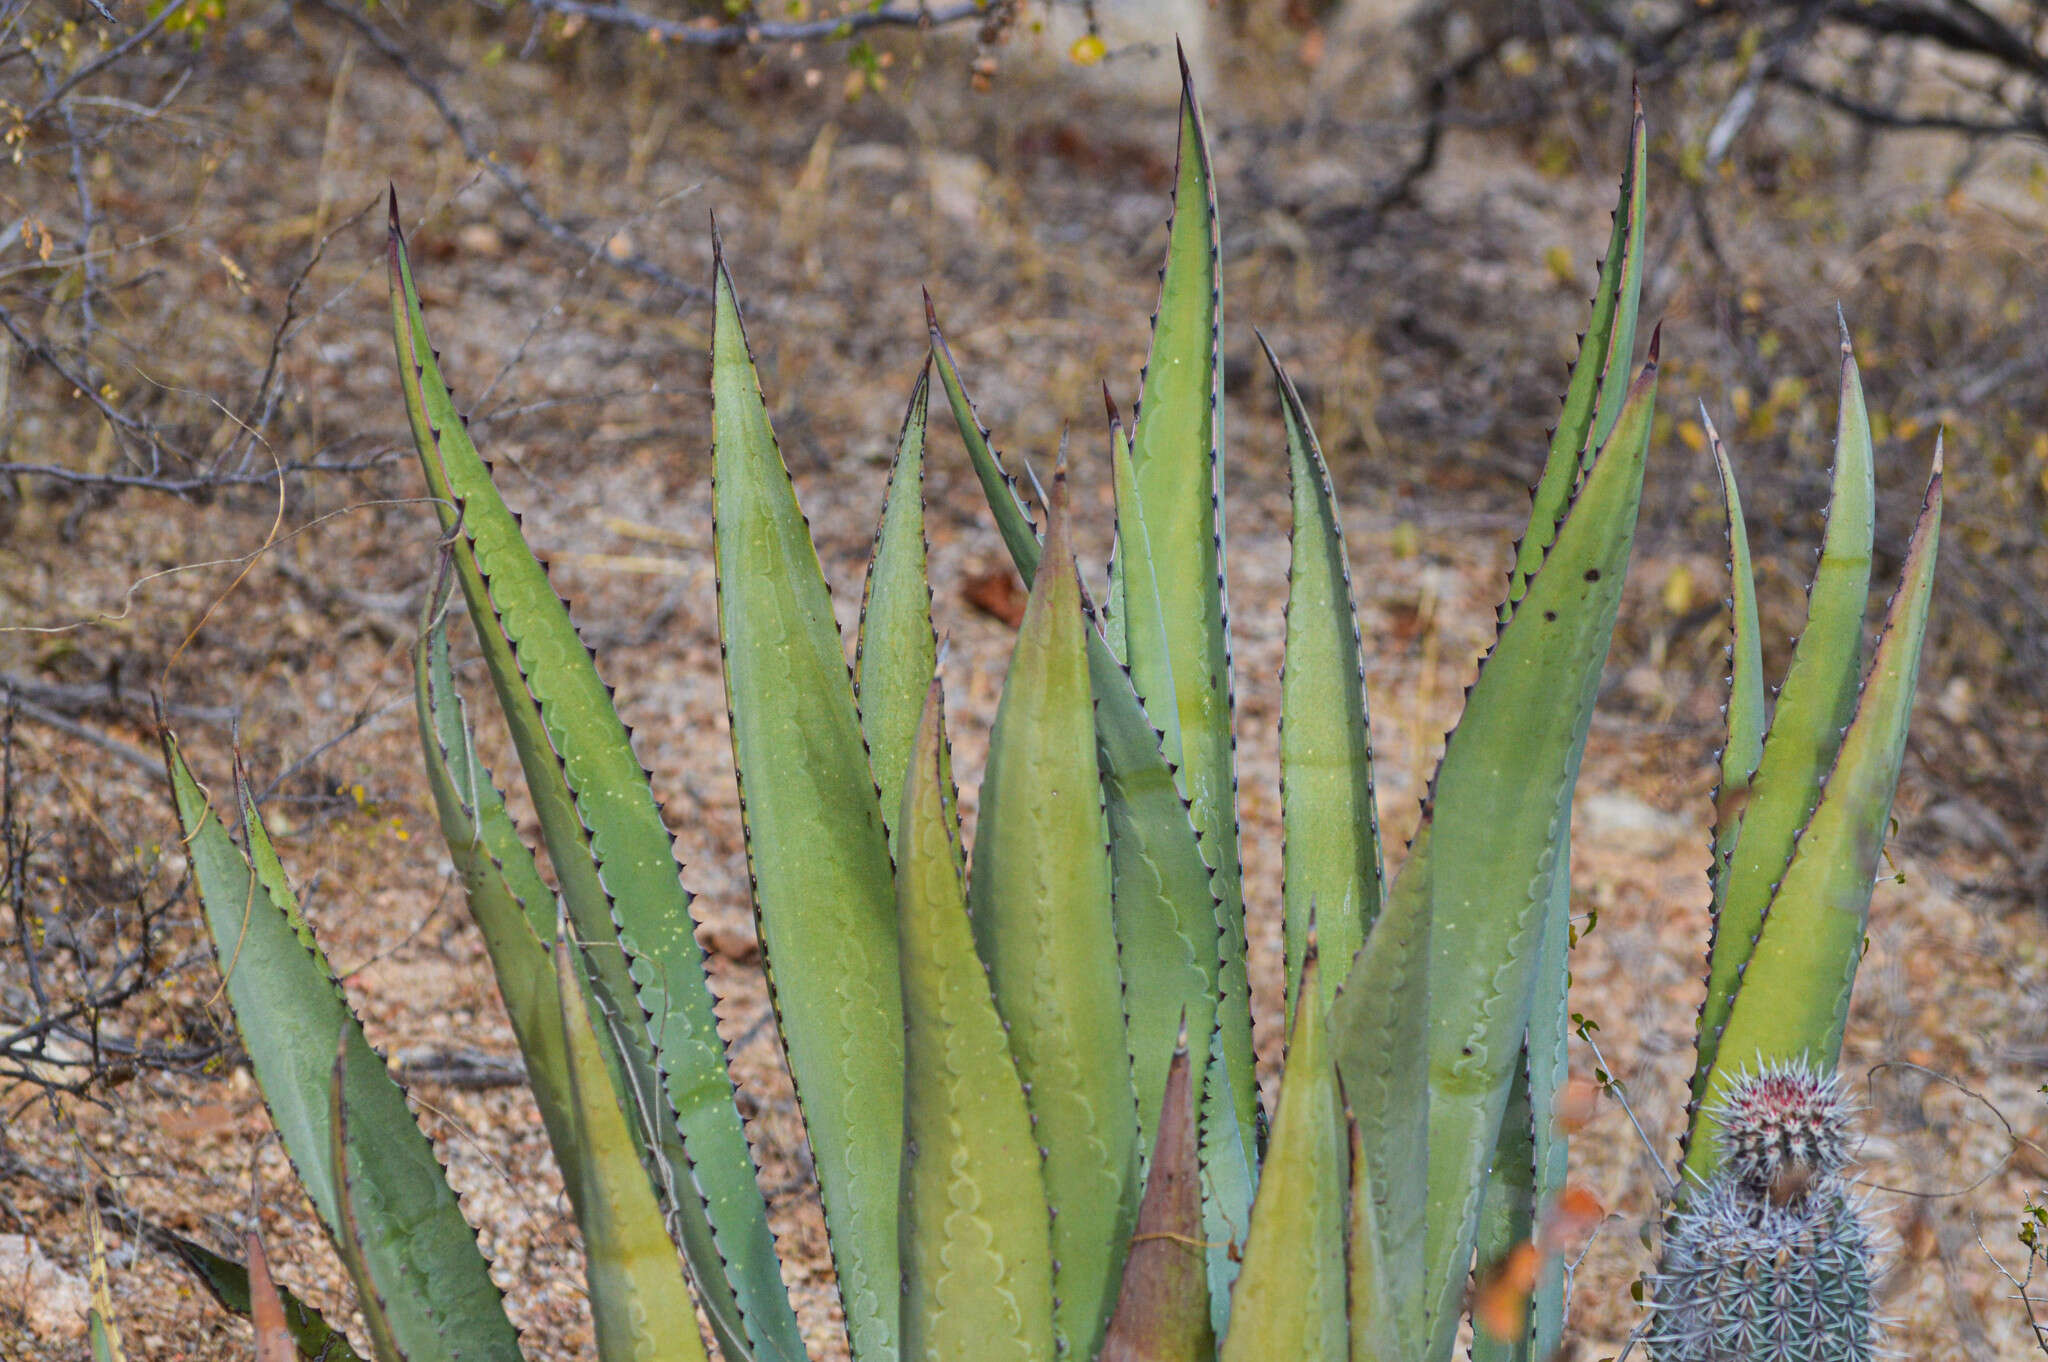 Image of Baja California Sur Agave